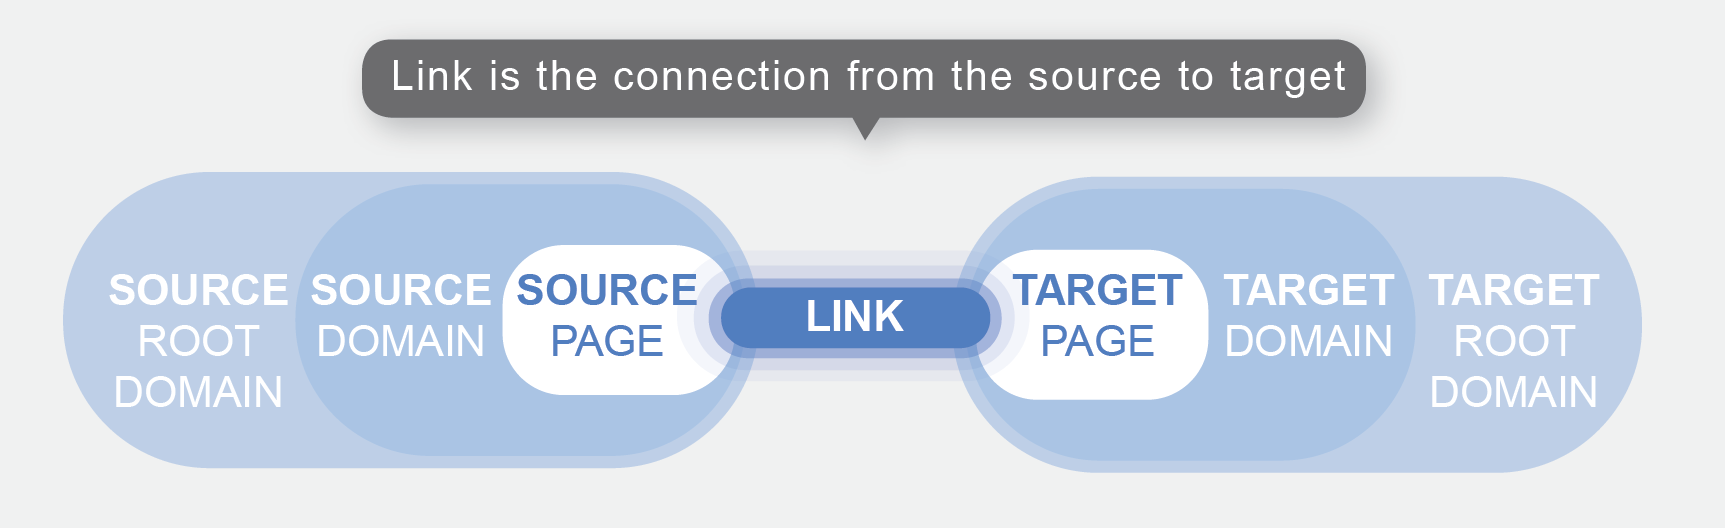 _usp_link_analysis_source_target